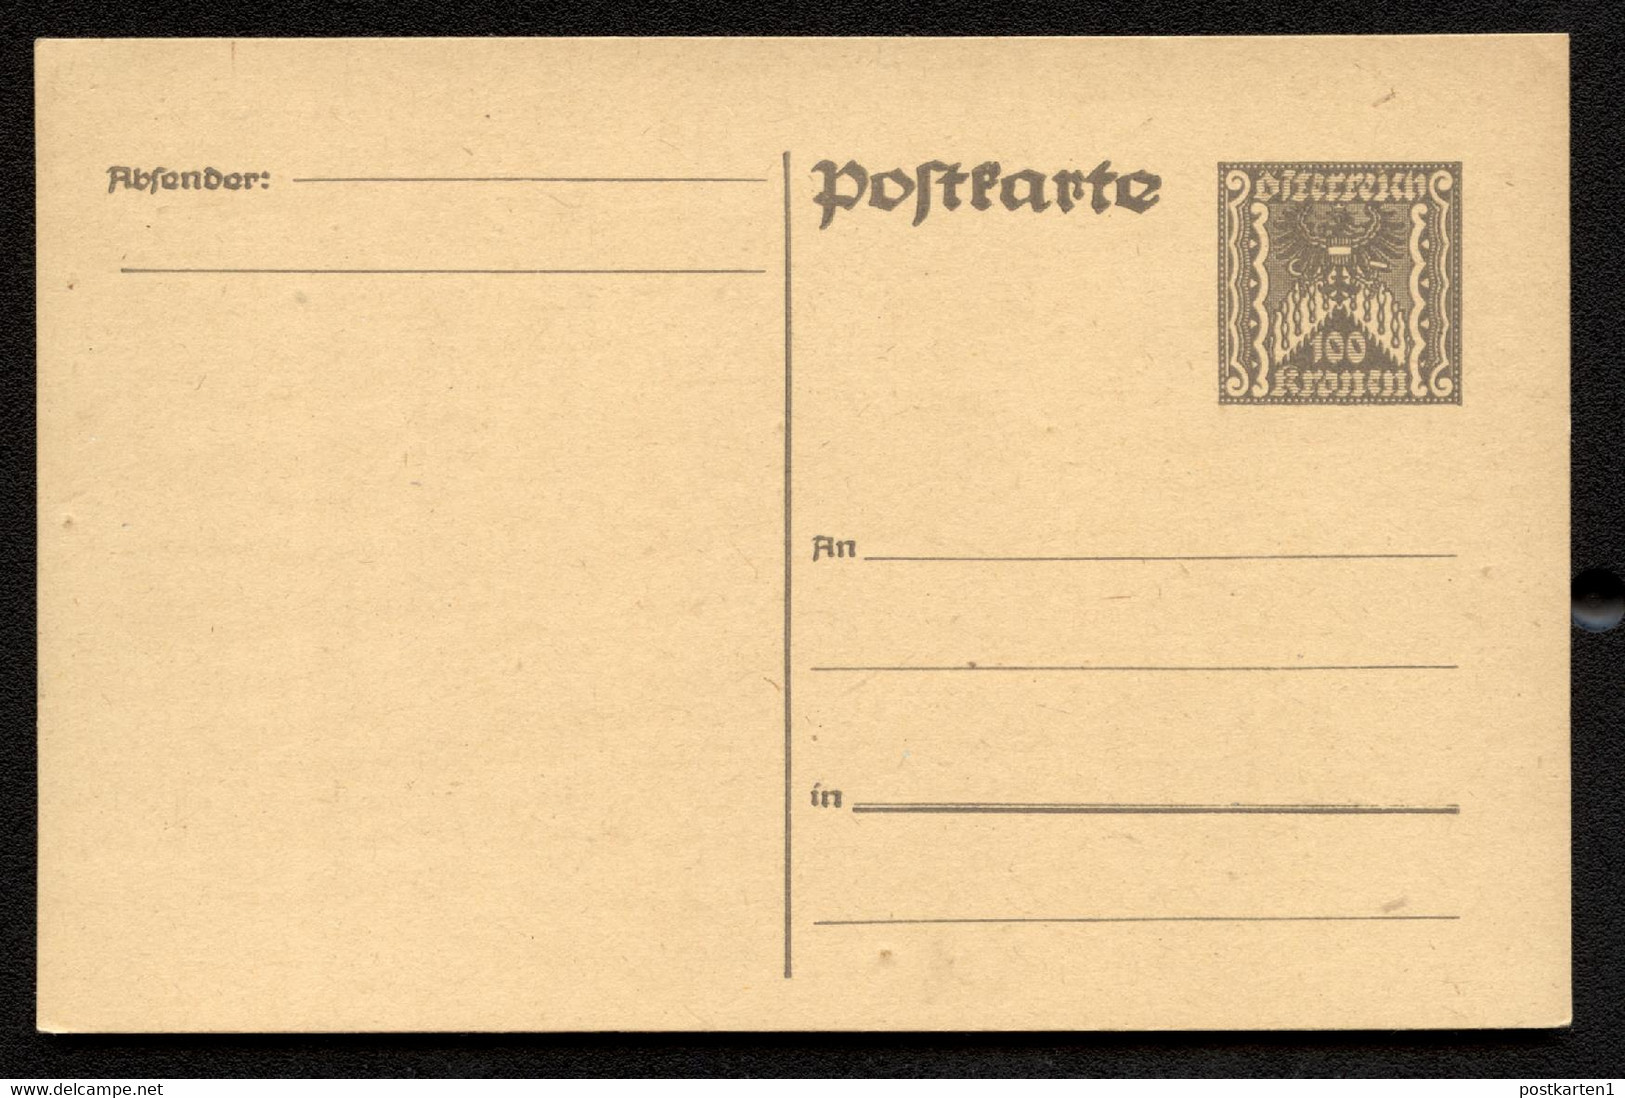 Postkarte P257 Postfrisch Feinst 1922 Kat.20,00 € - Cartes Postales